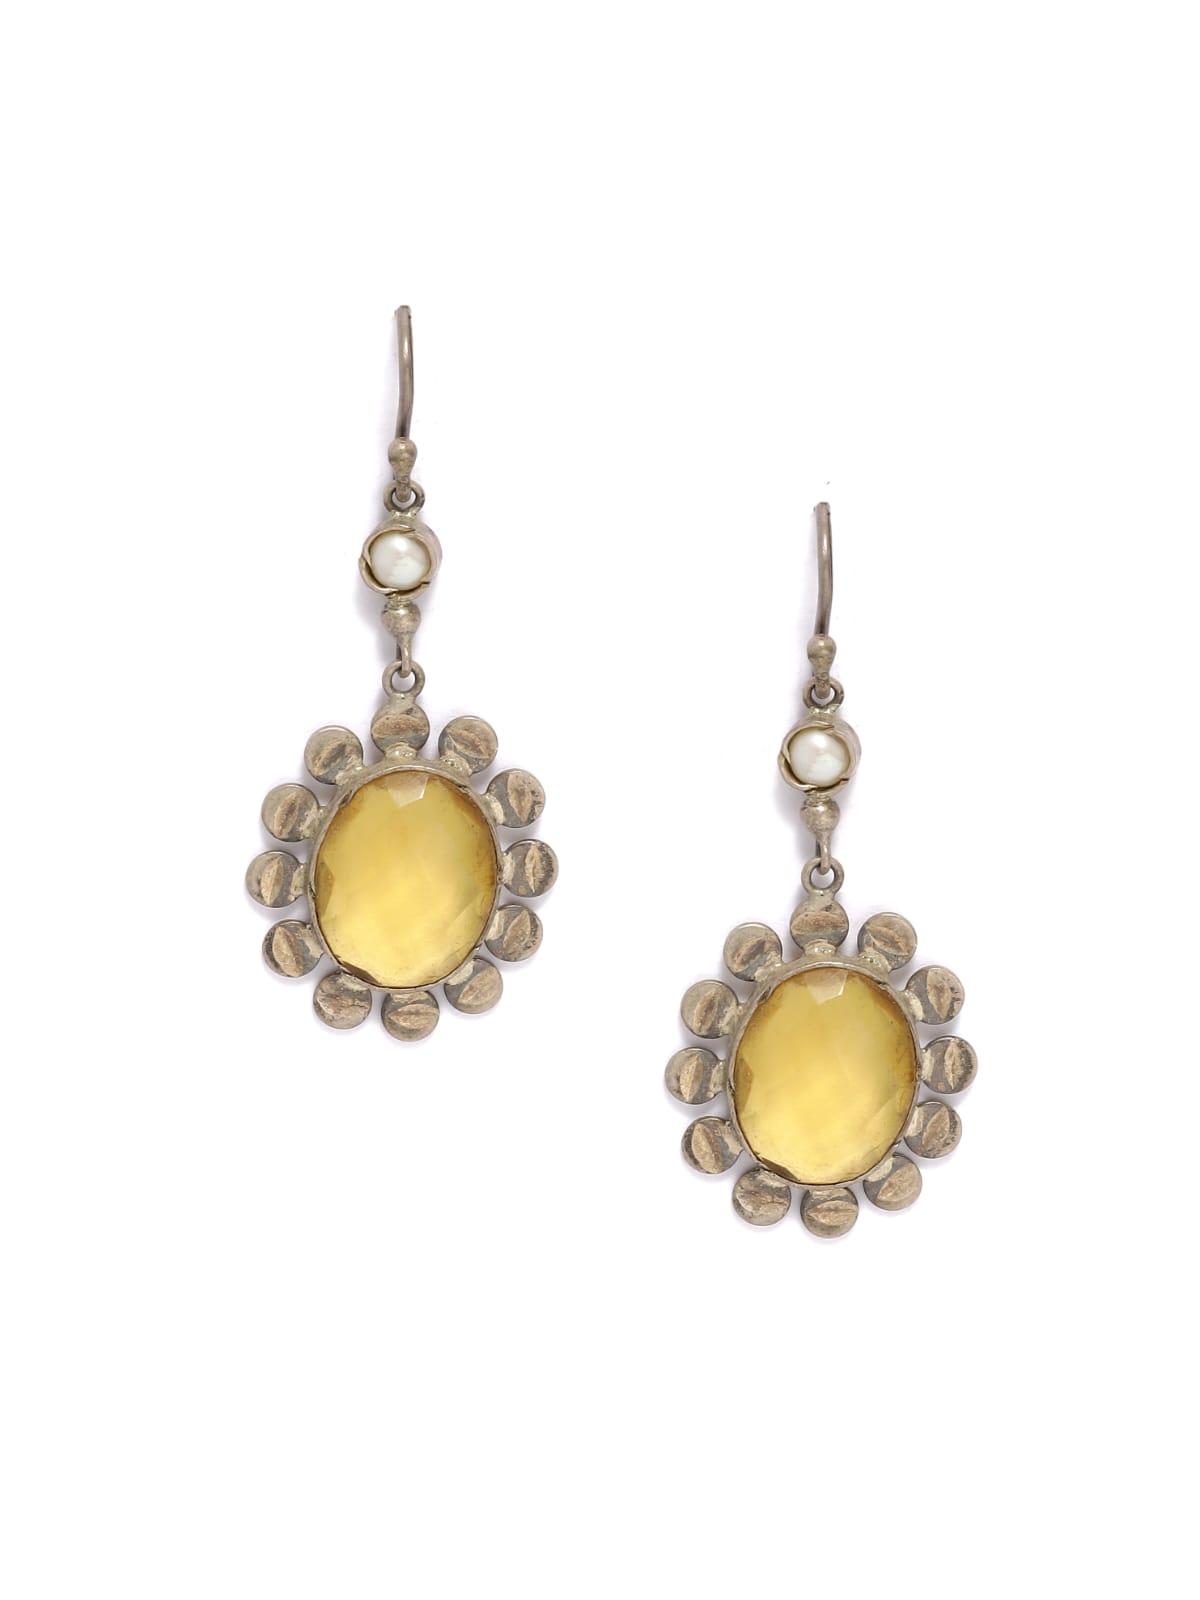 Sterling Silver yellow Citrine Pearl earrings.